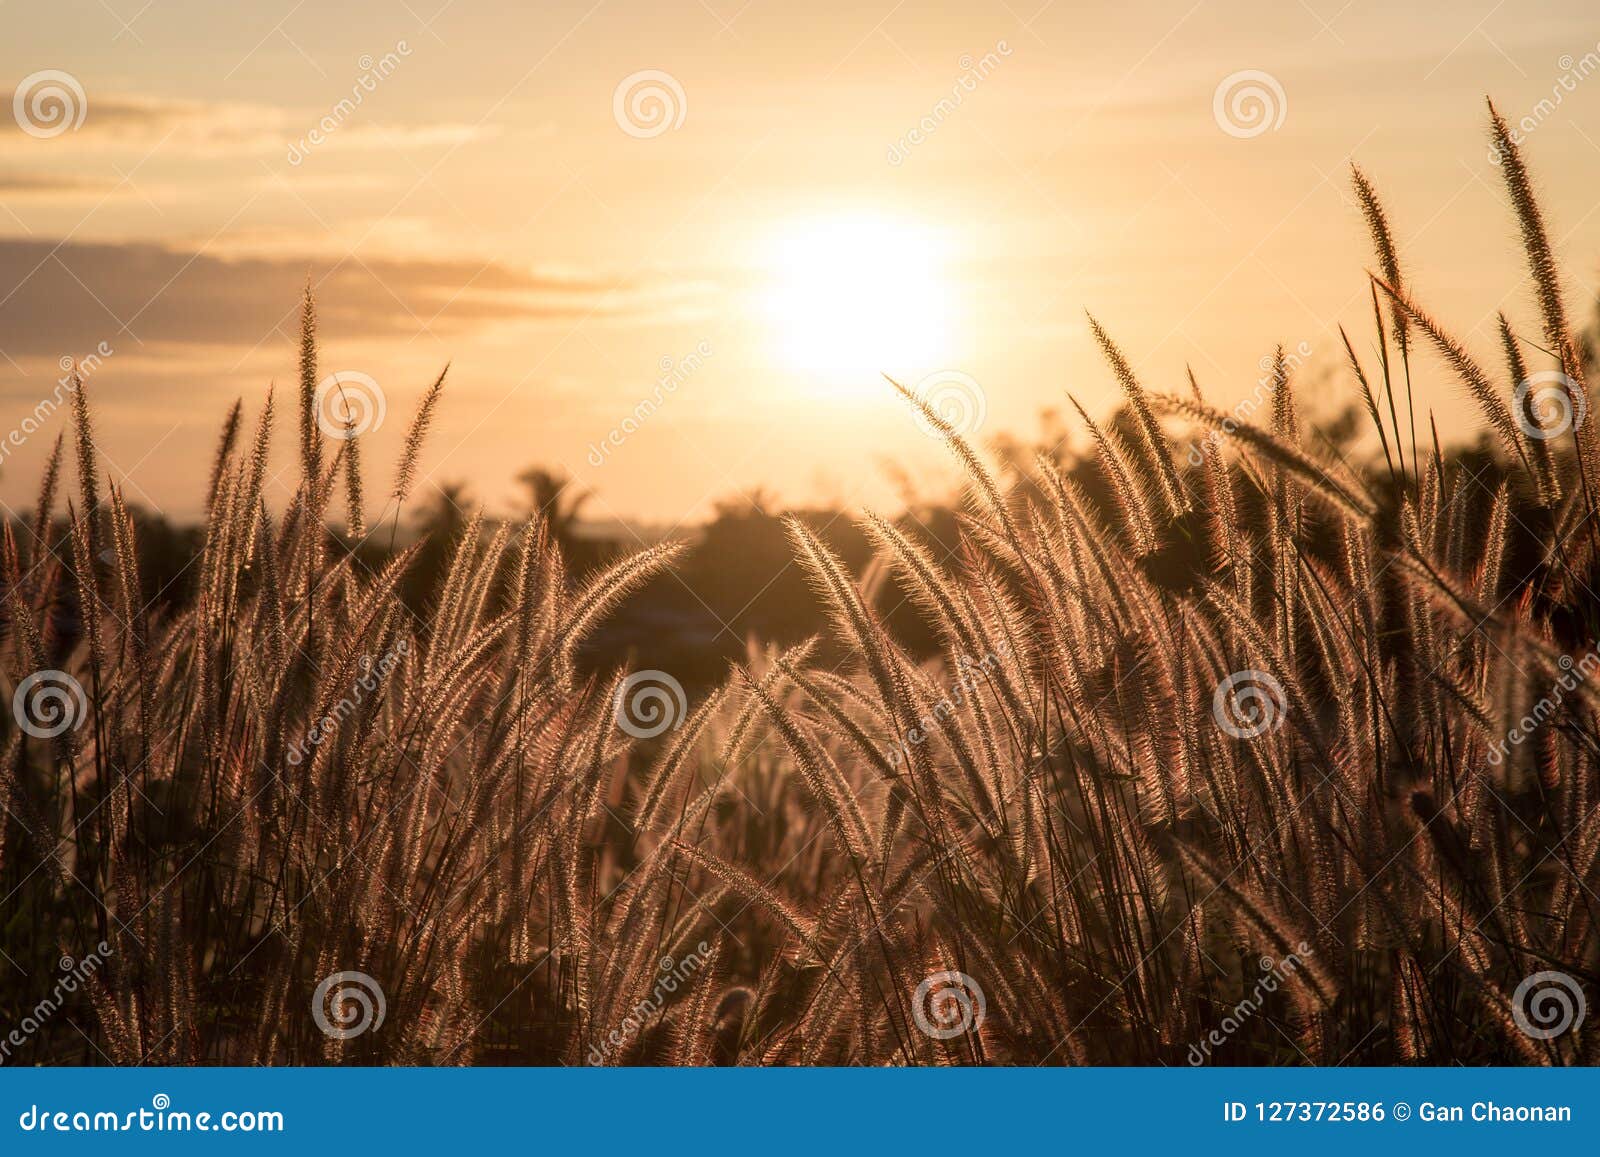 Golden Grass, Sunset Background. Stock Photo - Image of evening, beauty